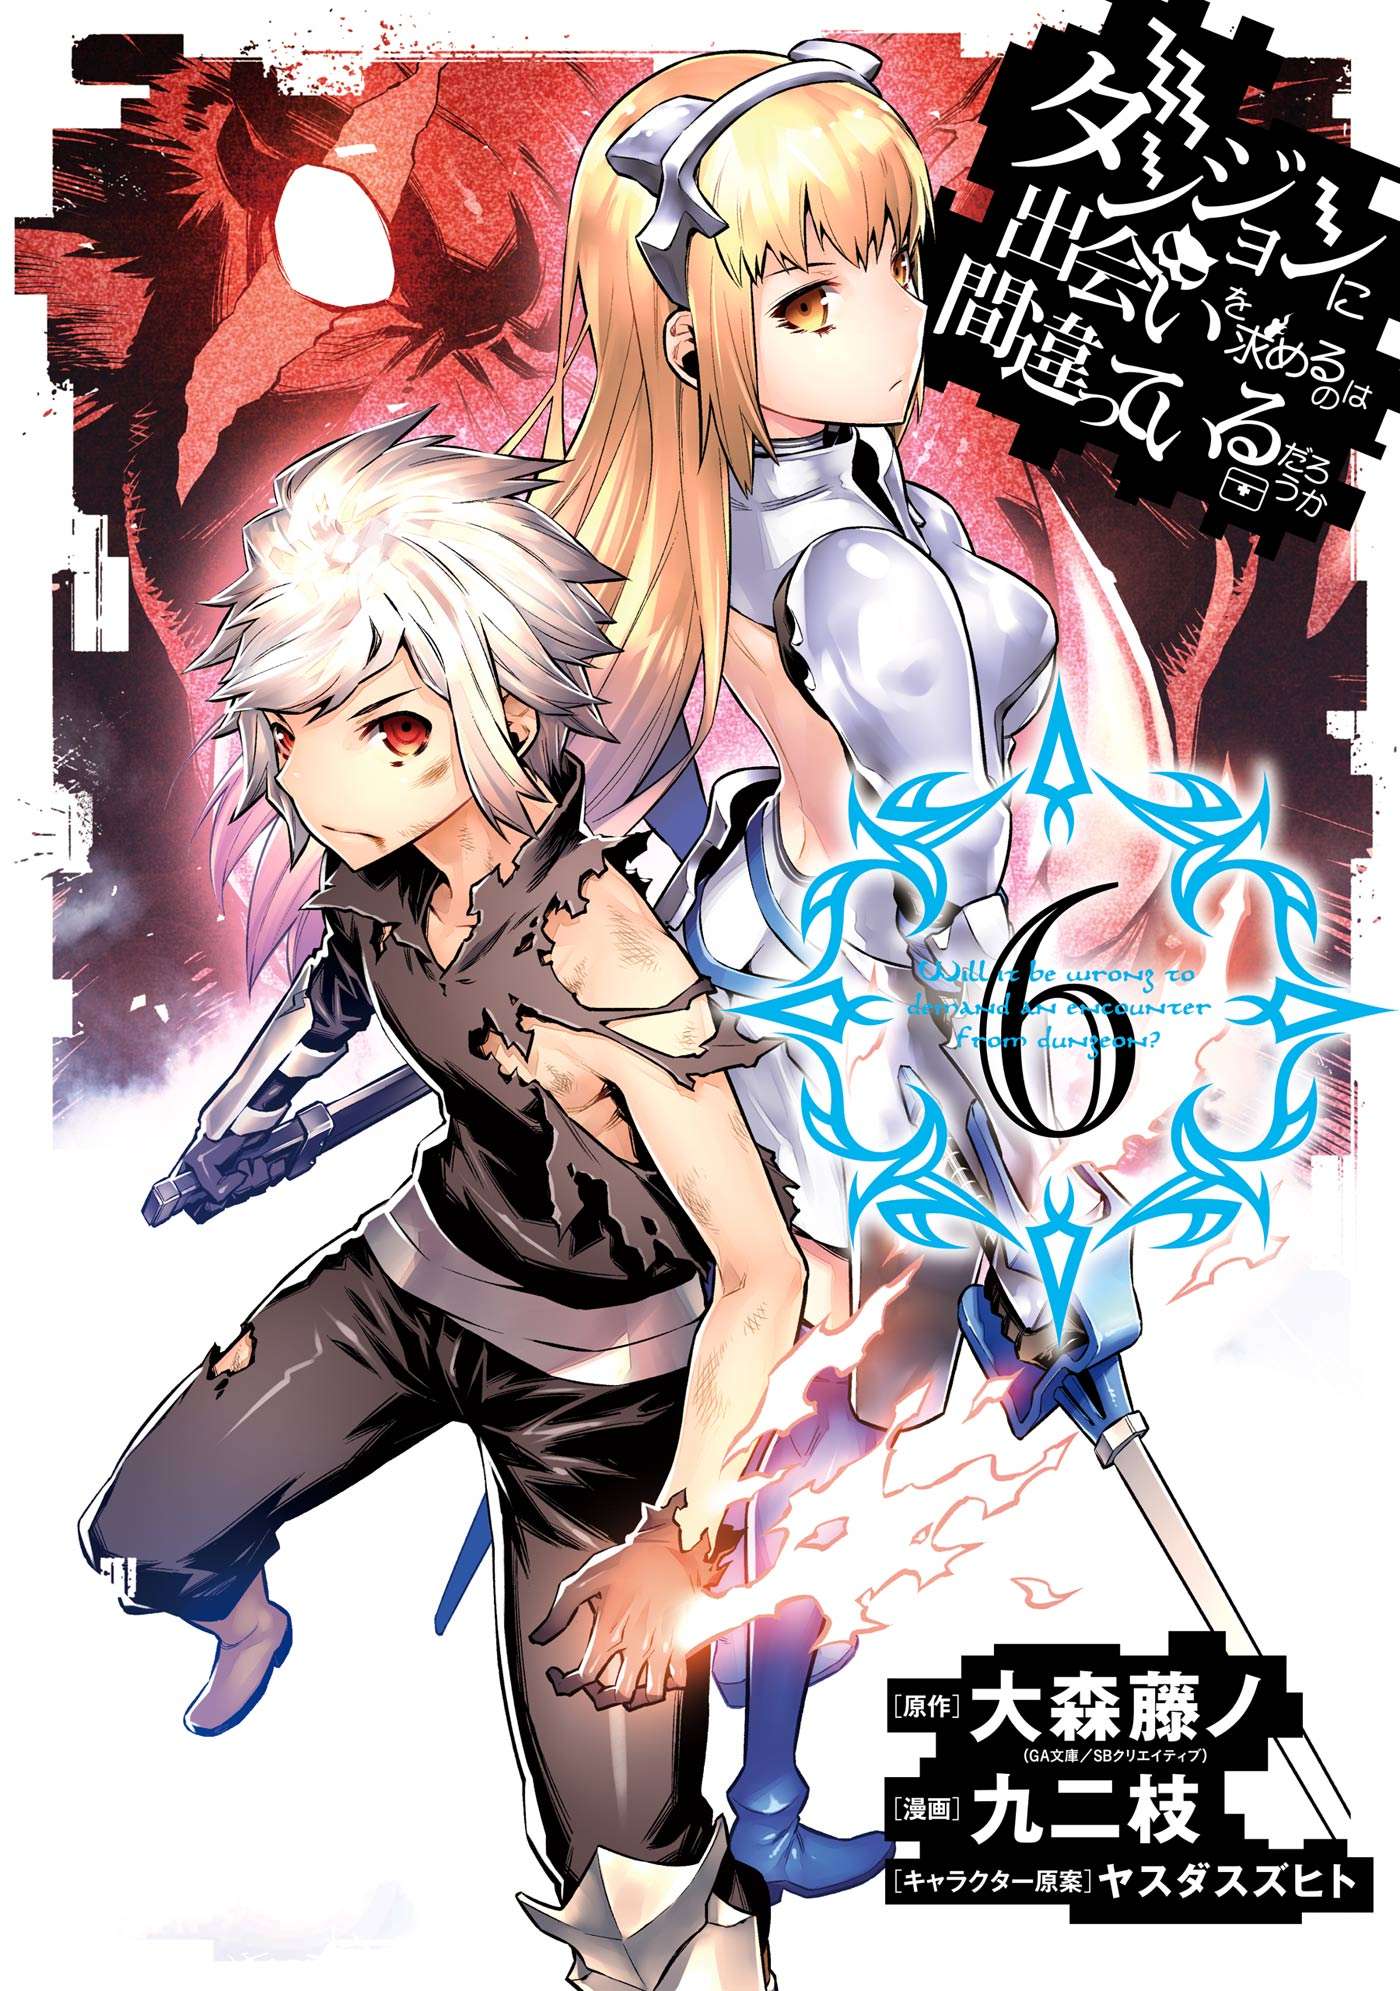 DanMachi Light Novel Volume 17, DanMachi Wiki